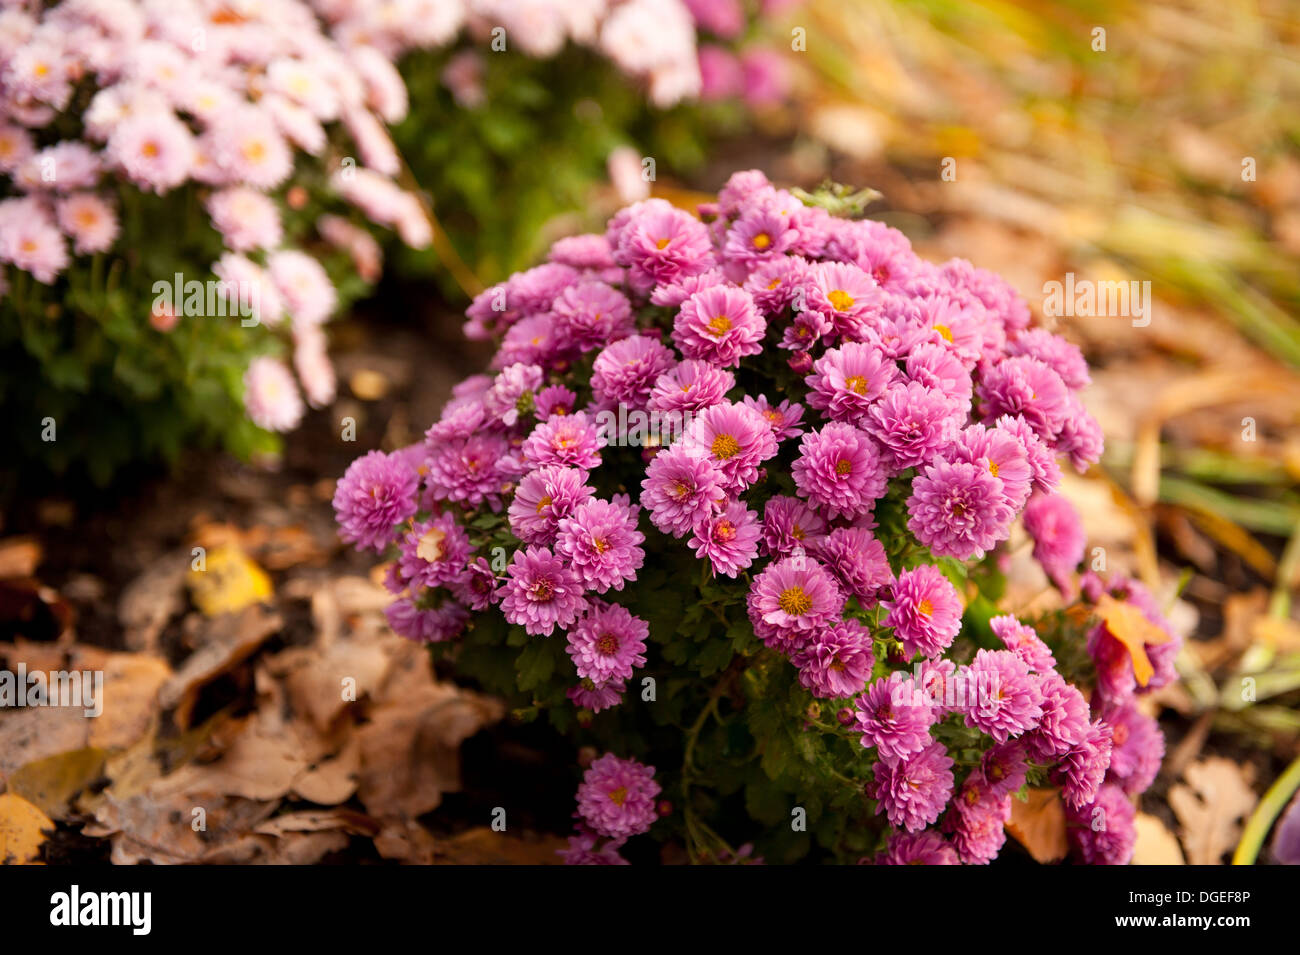 Bunch of flowering pink chrysanthemum clump Stock Photo